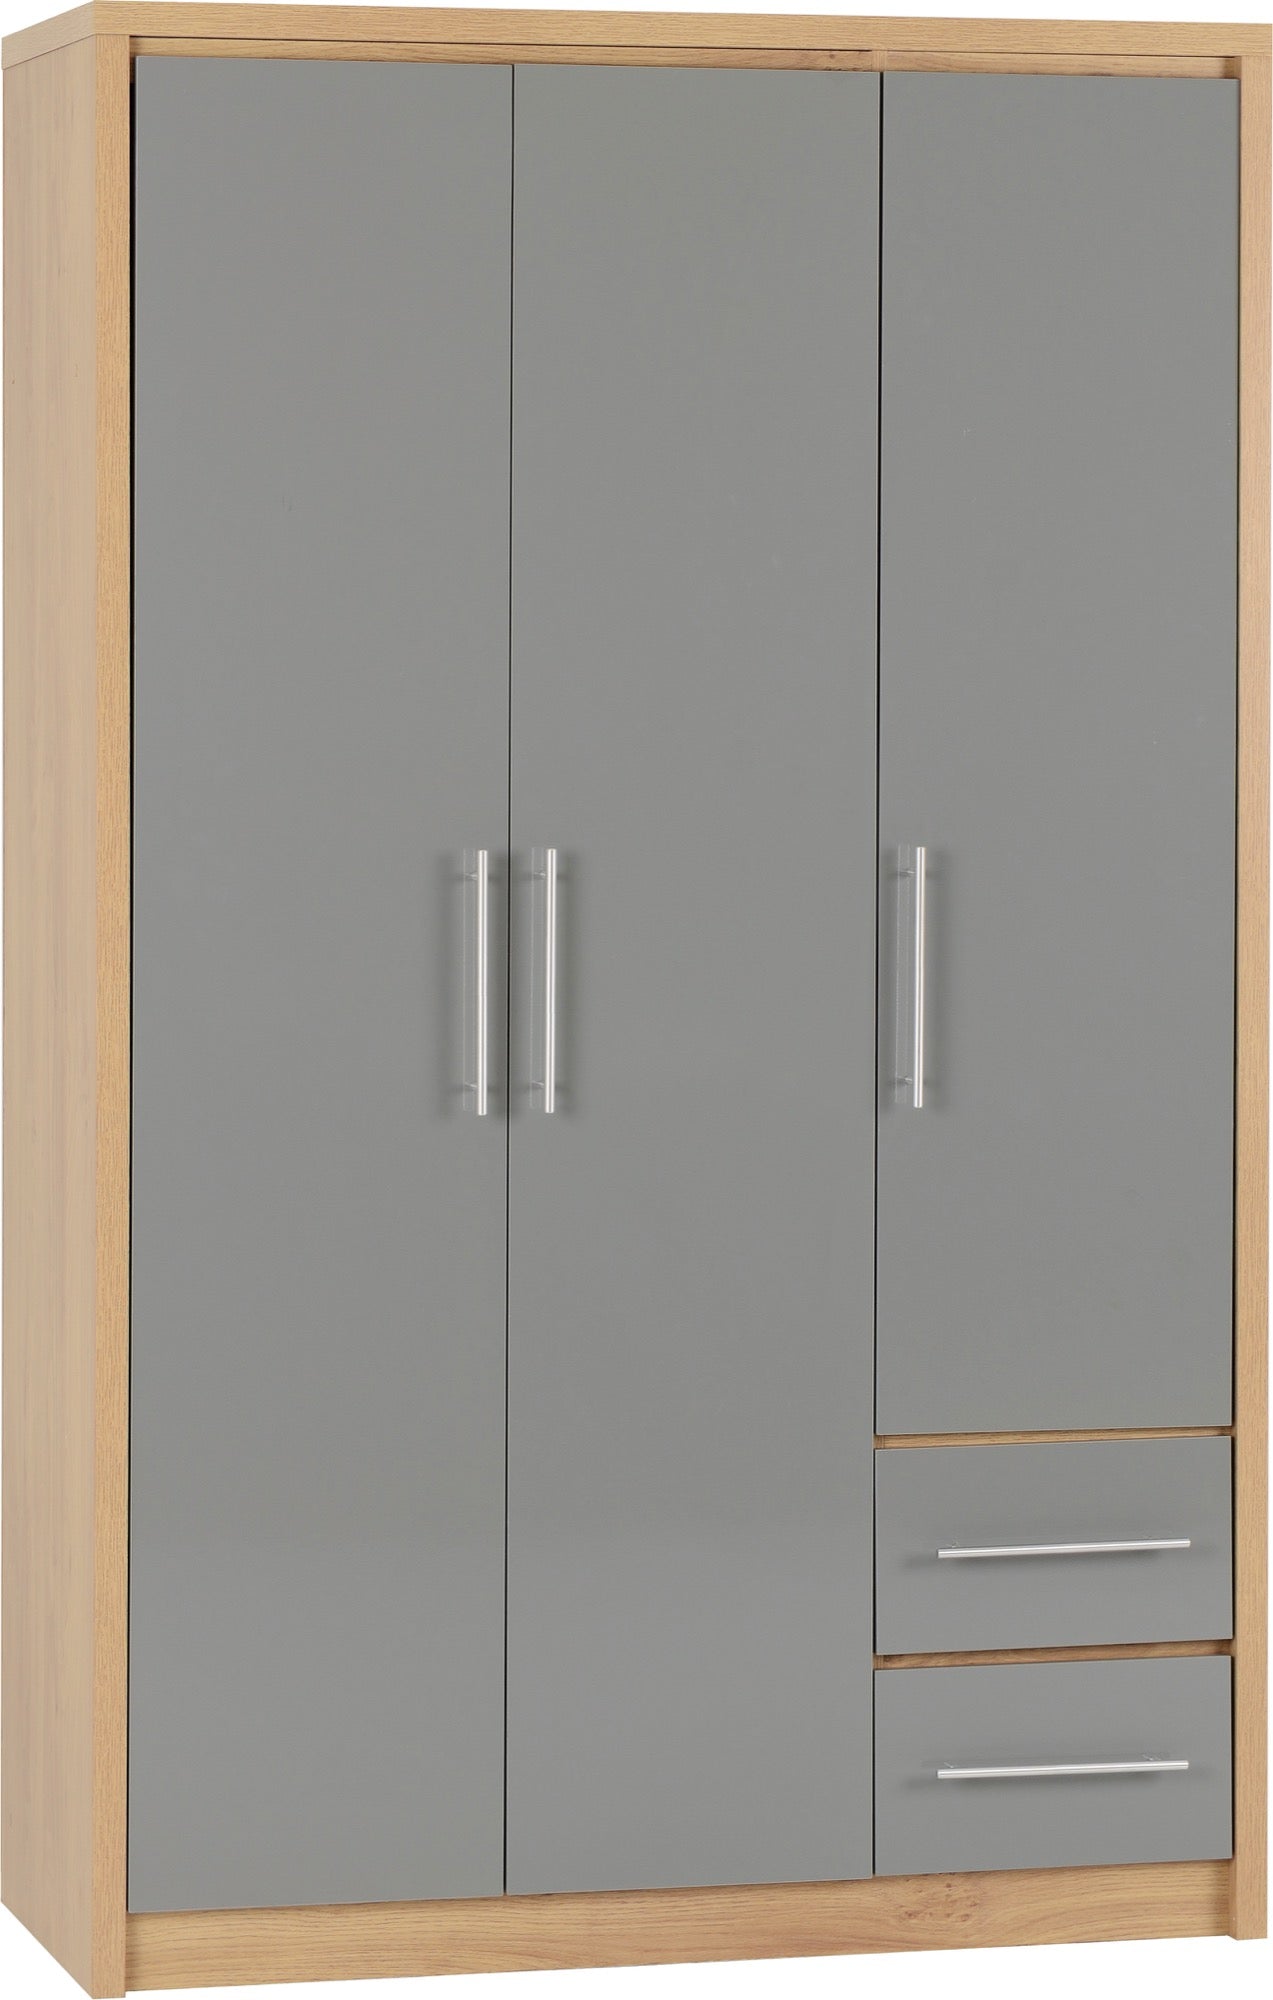 Seville 3 Door 2 Drawer Wardrobe Grey High Gloss/Light Oak Effect Veneer